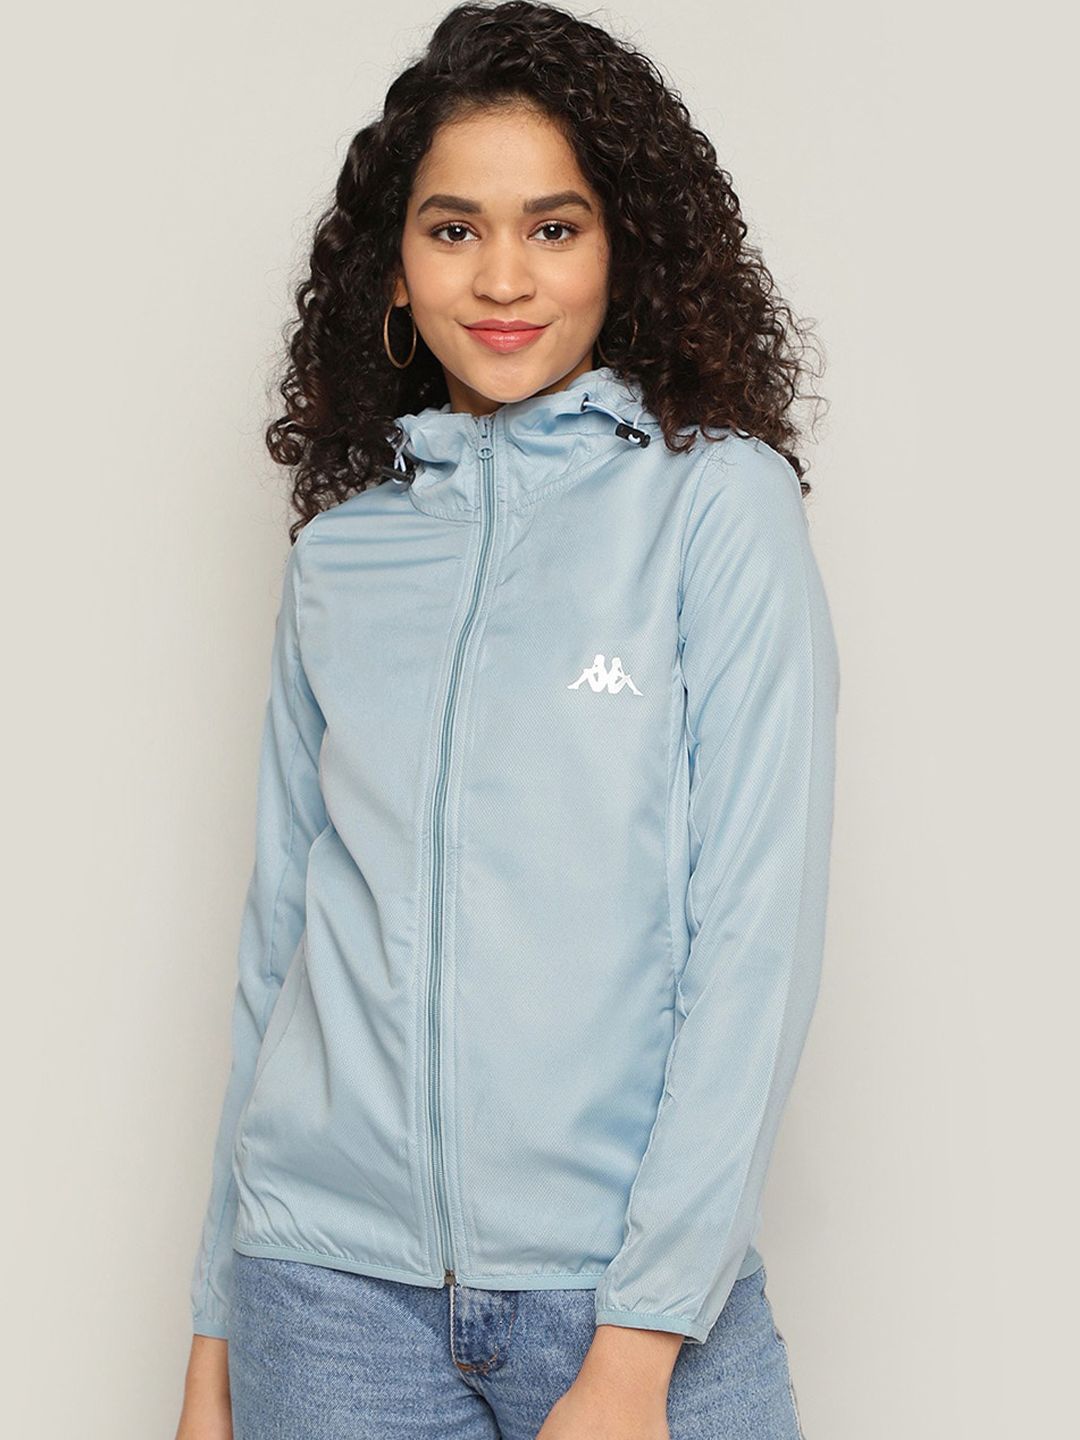 Kappa Women Blue Sporty Jacket Price in India